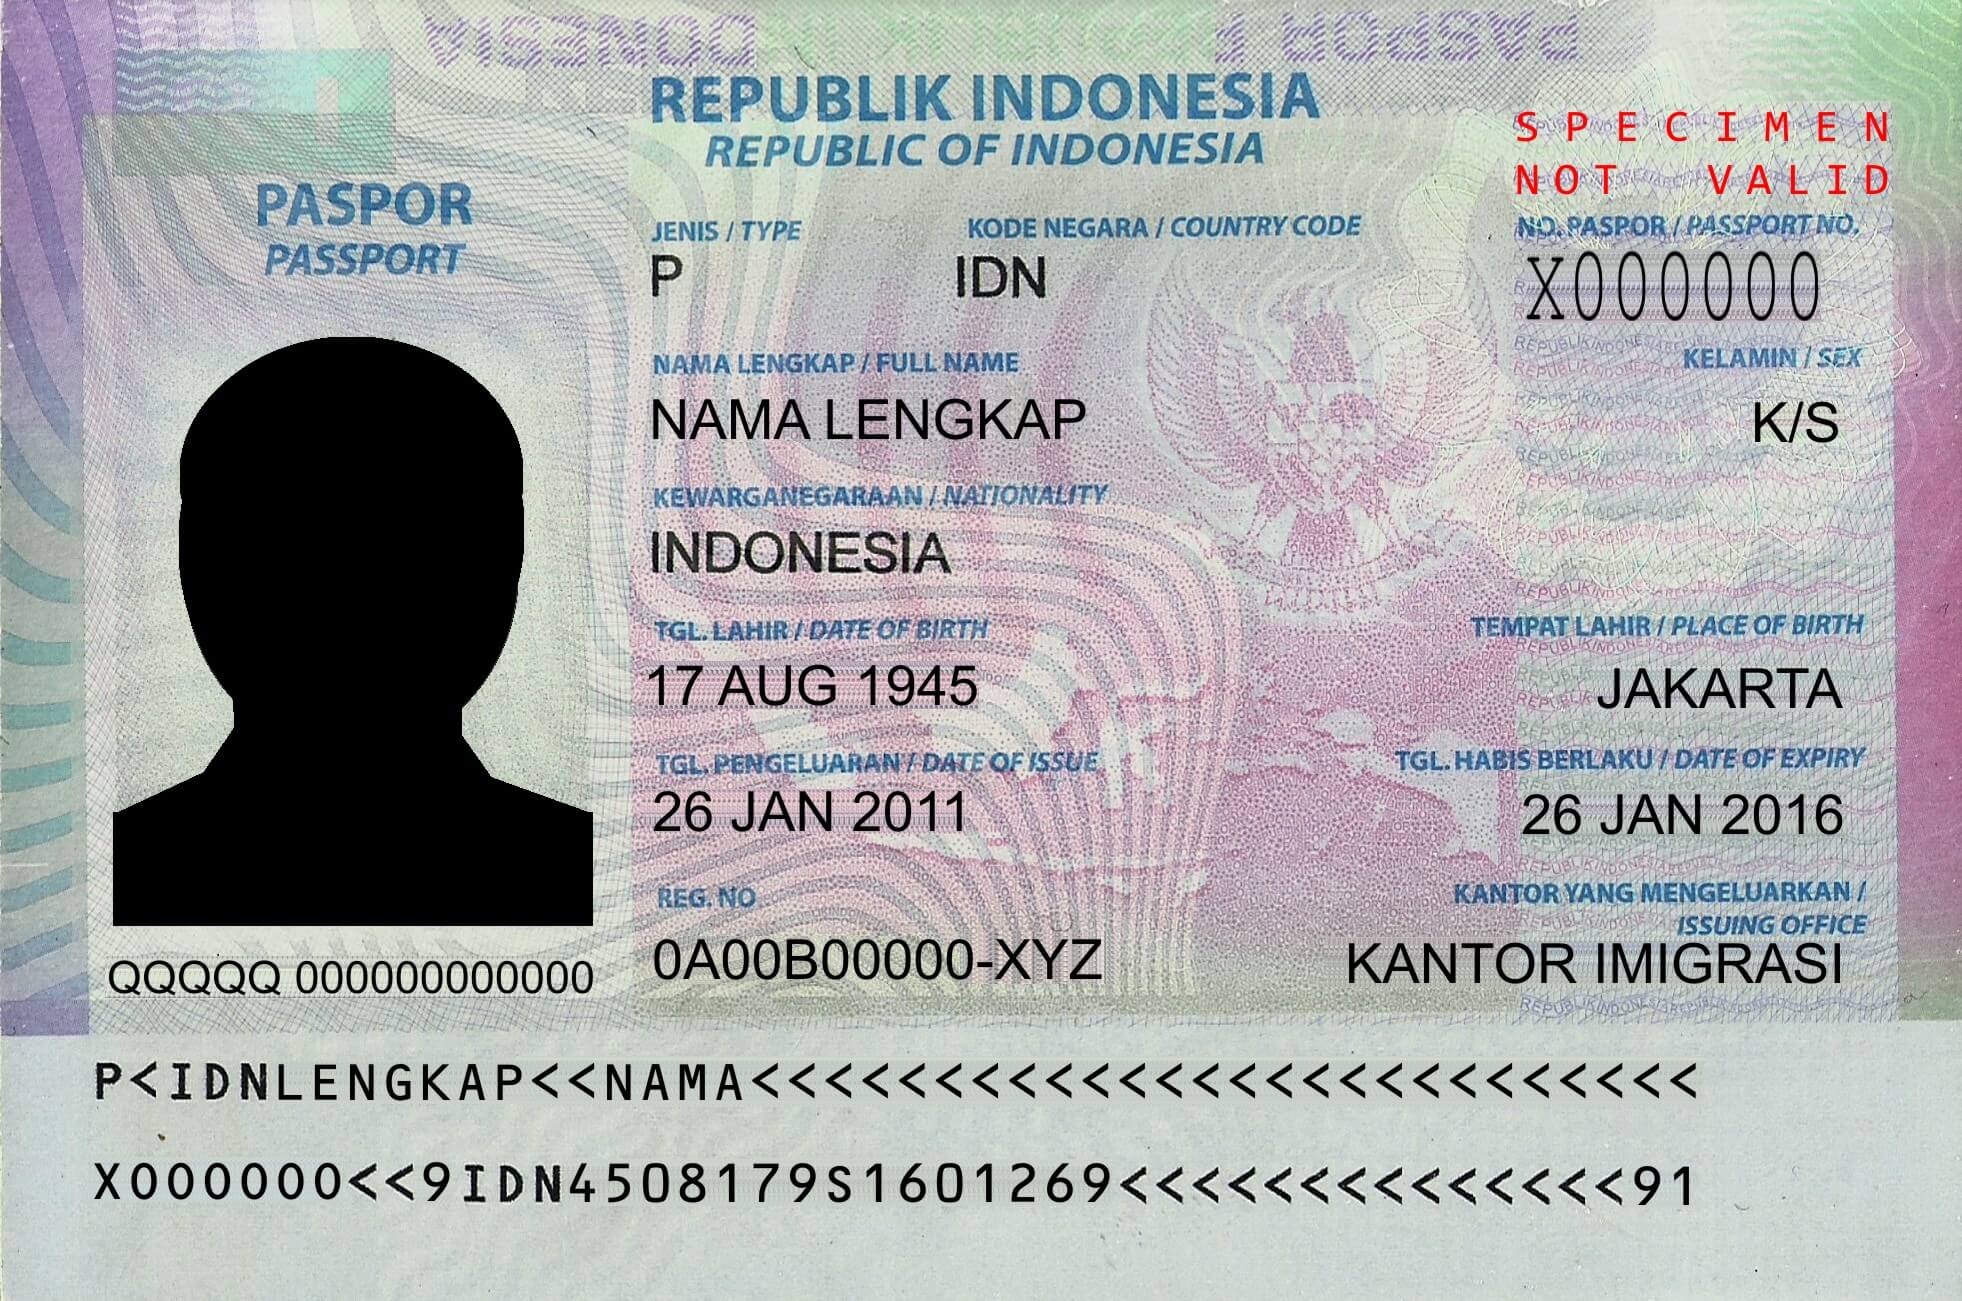 Do Indonesia citizens need a visa to Vietnam?